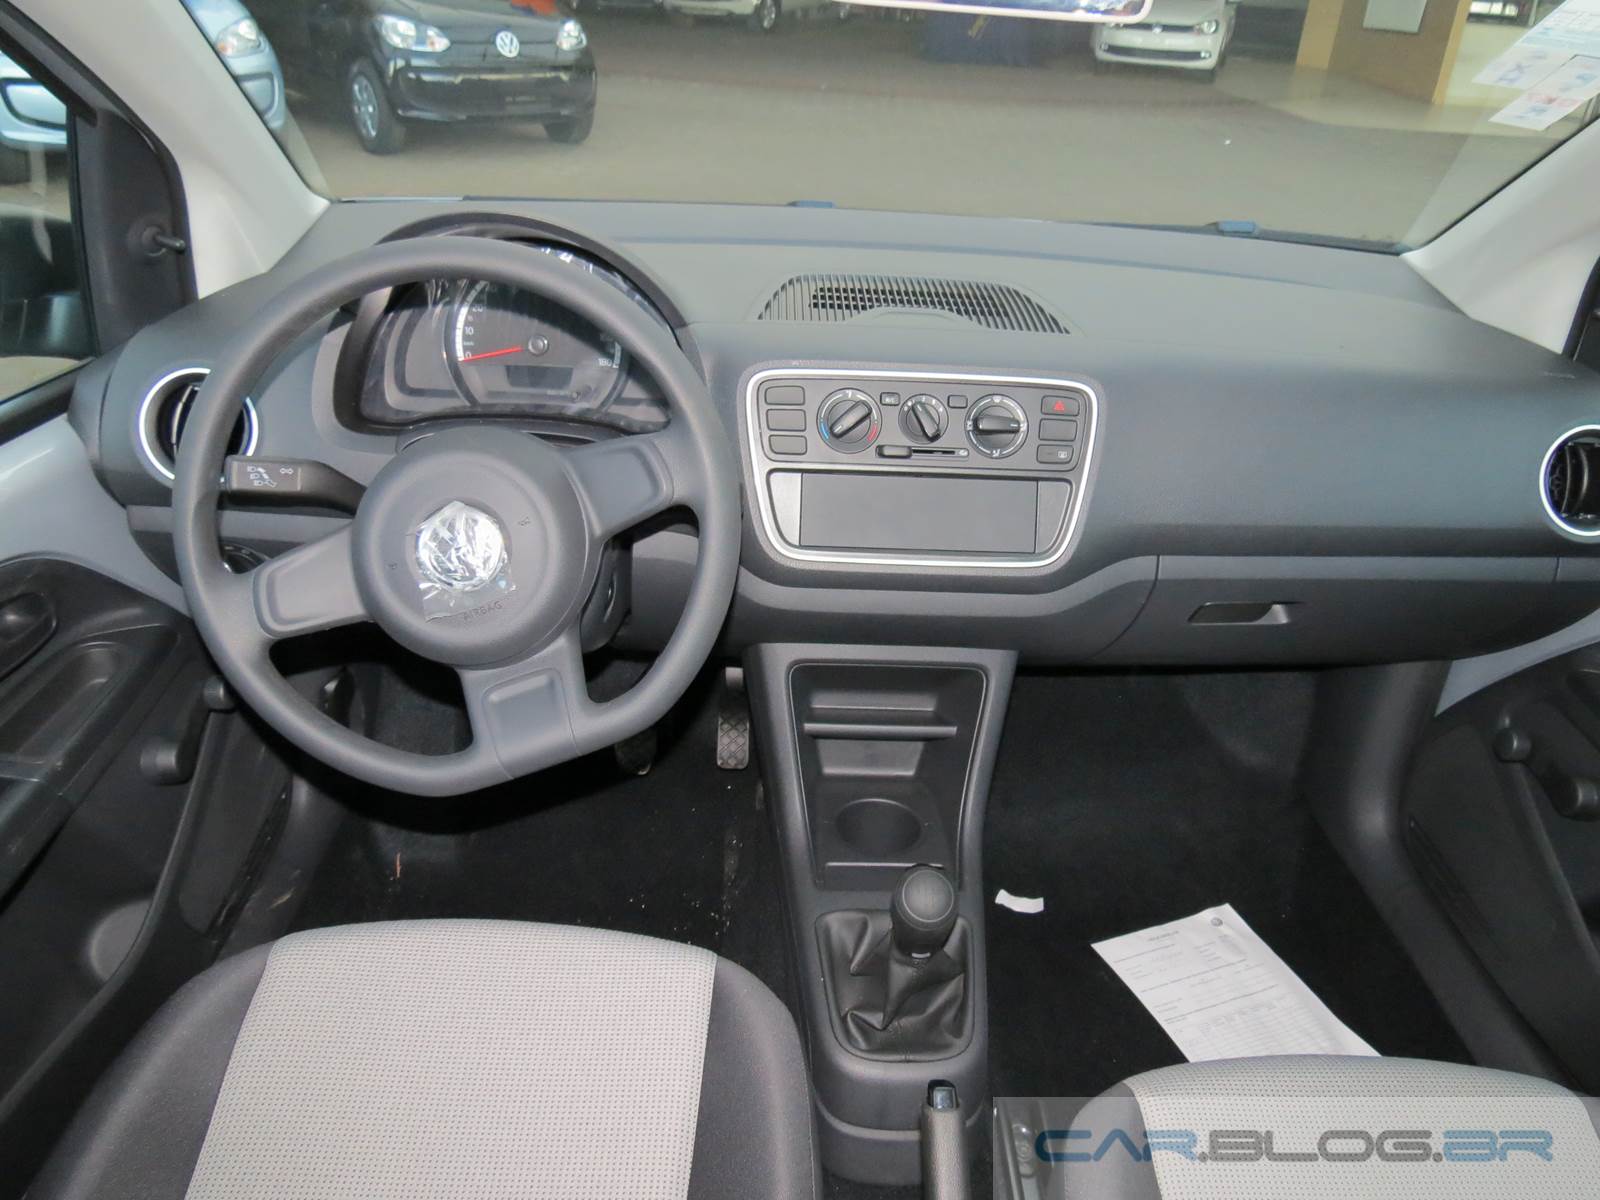 Volkswagen up! 2 portas 2015 - interior